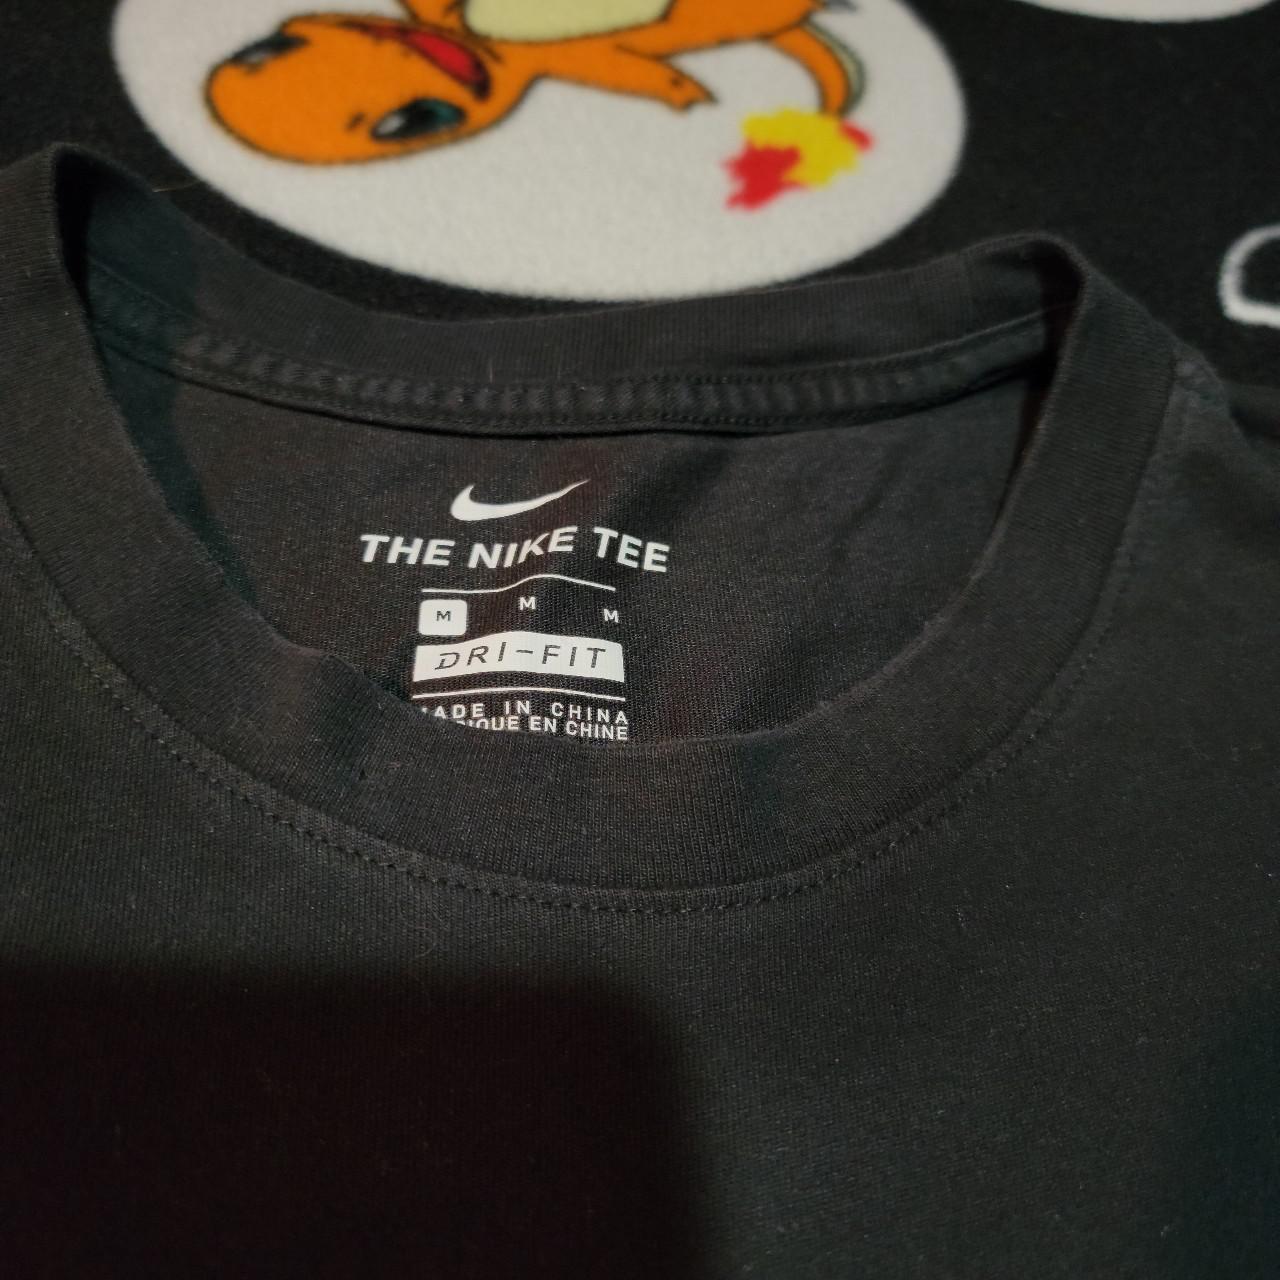 Nike Cleveland Indians Dri-Fit t shirt Size L #nike - Depop